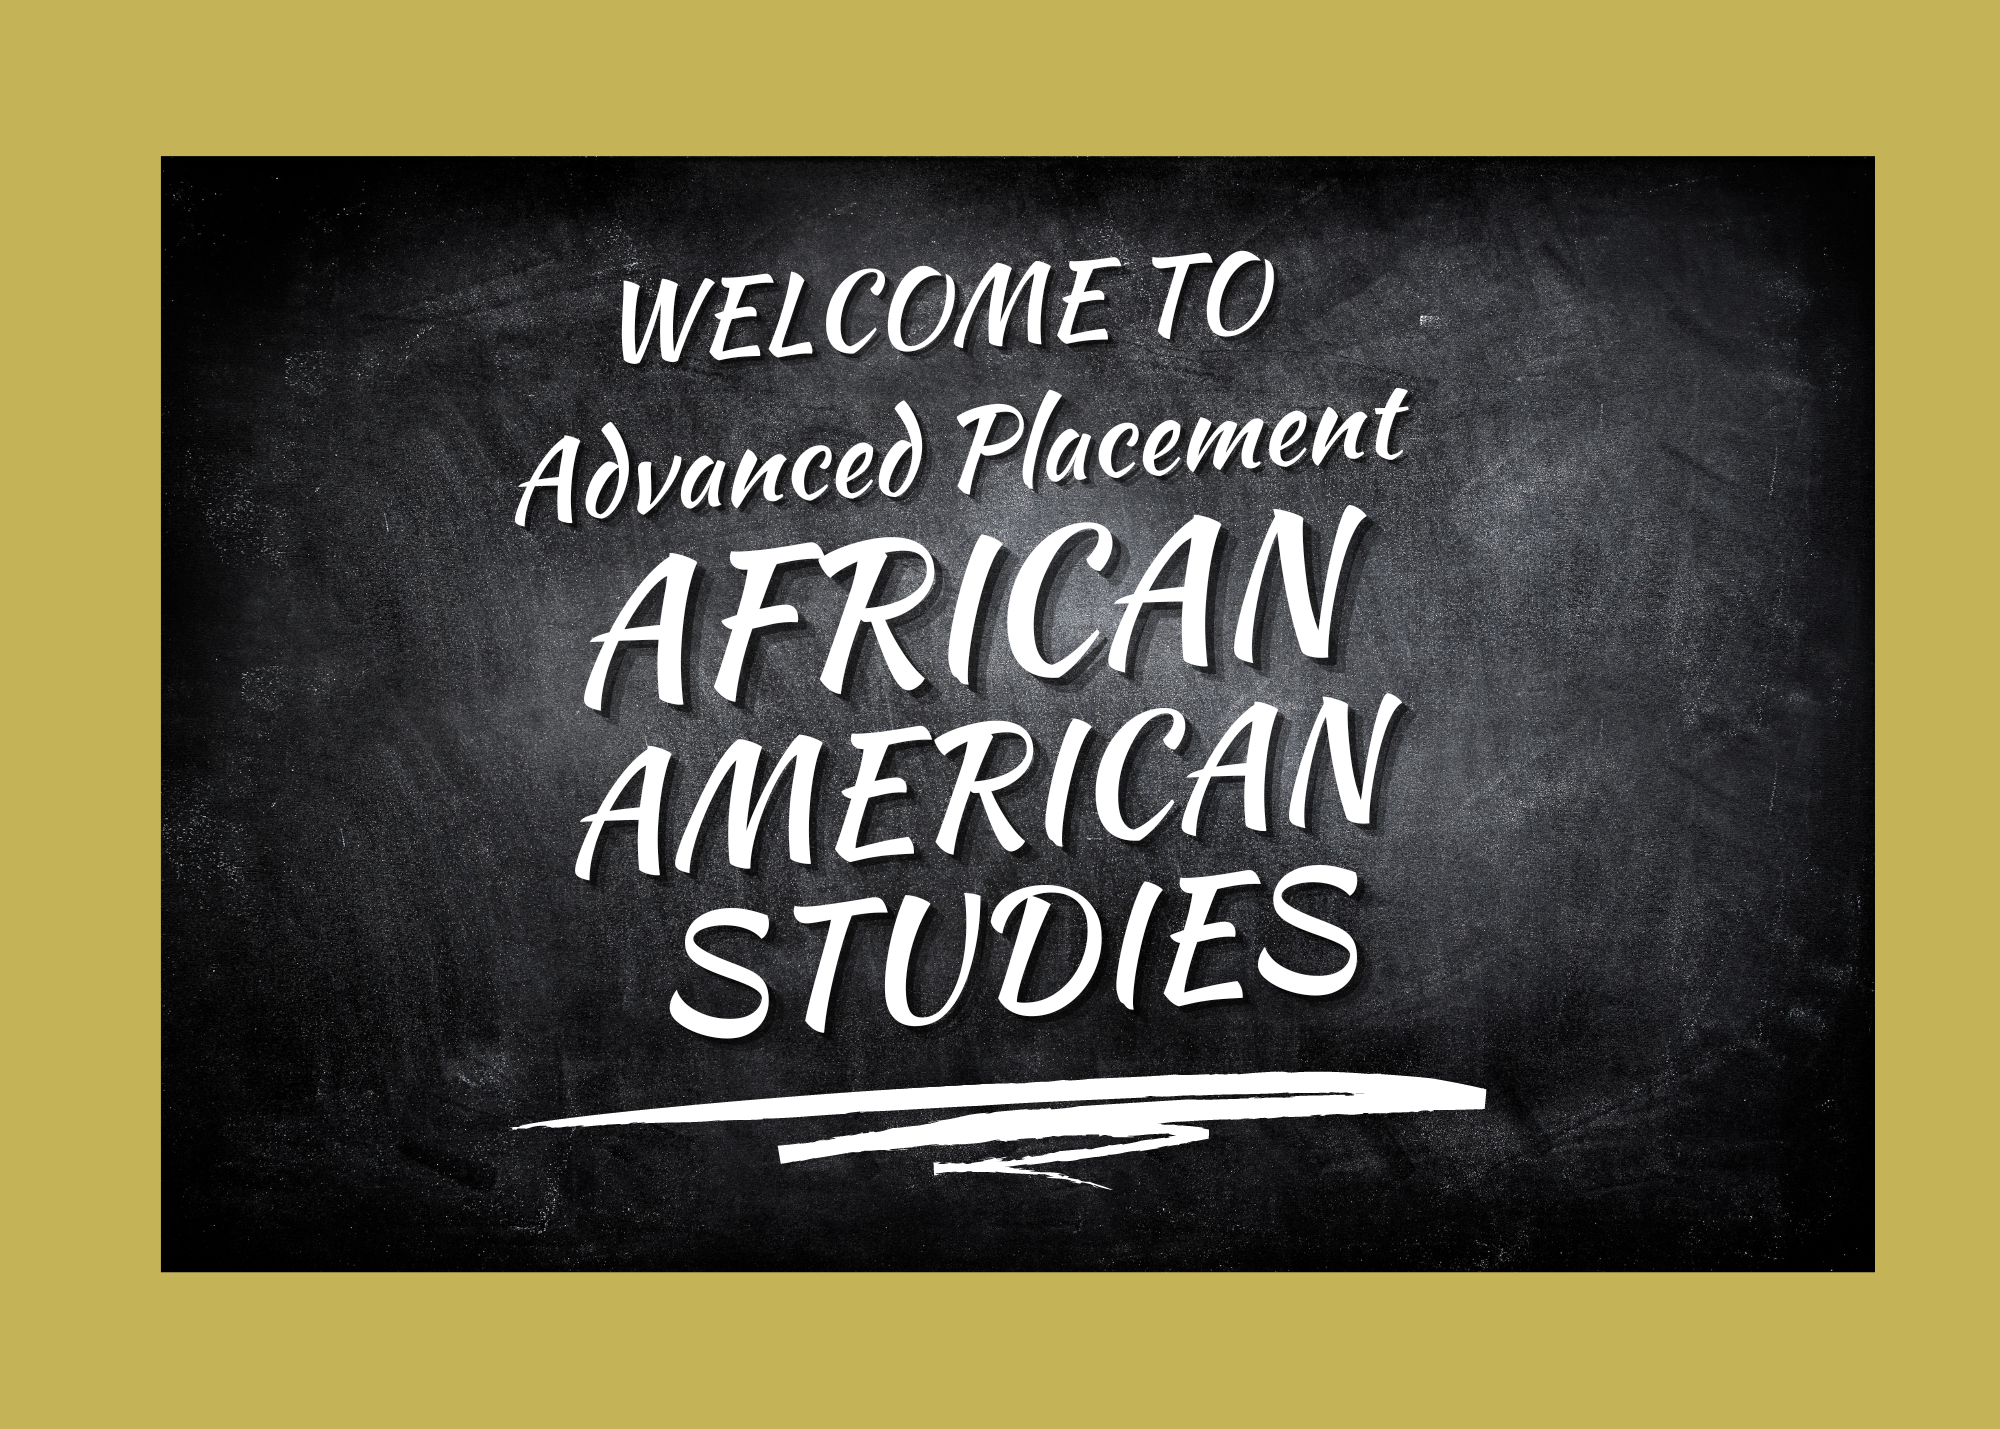 Warren G. Harding High School among select group of schools chosen for Pilot African American Studies Course